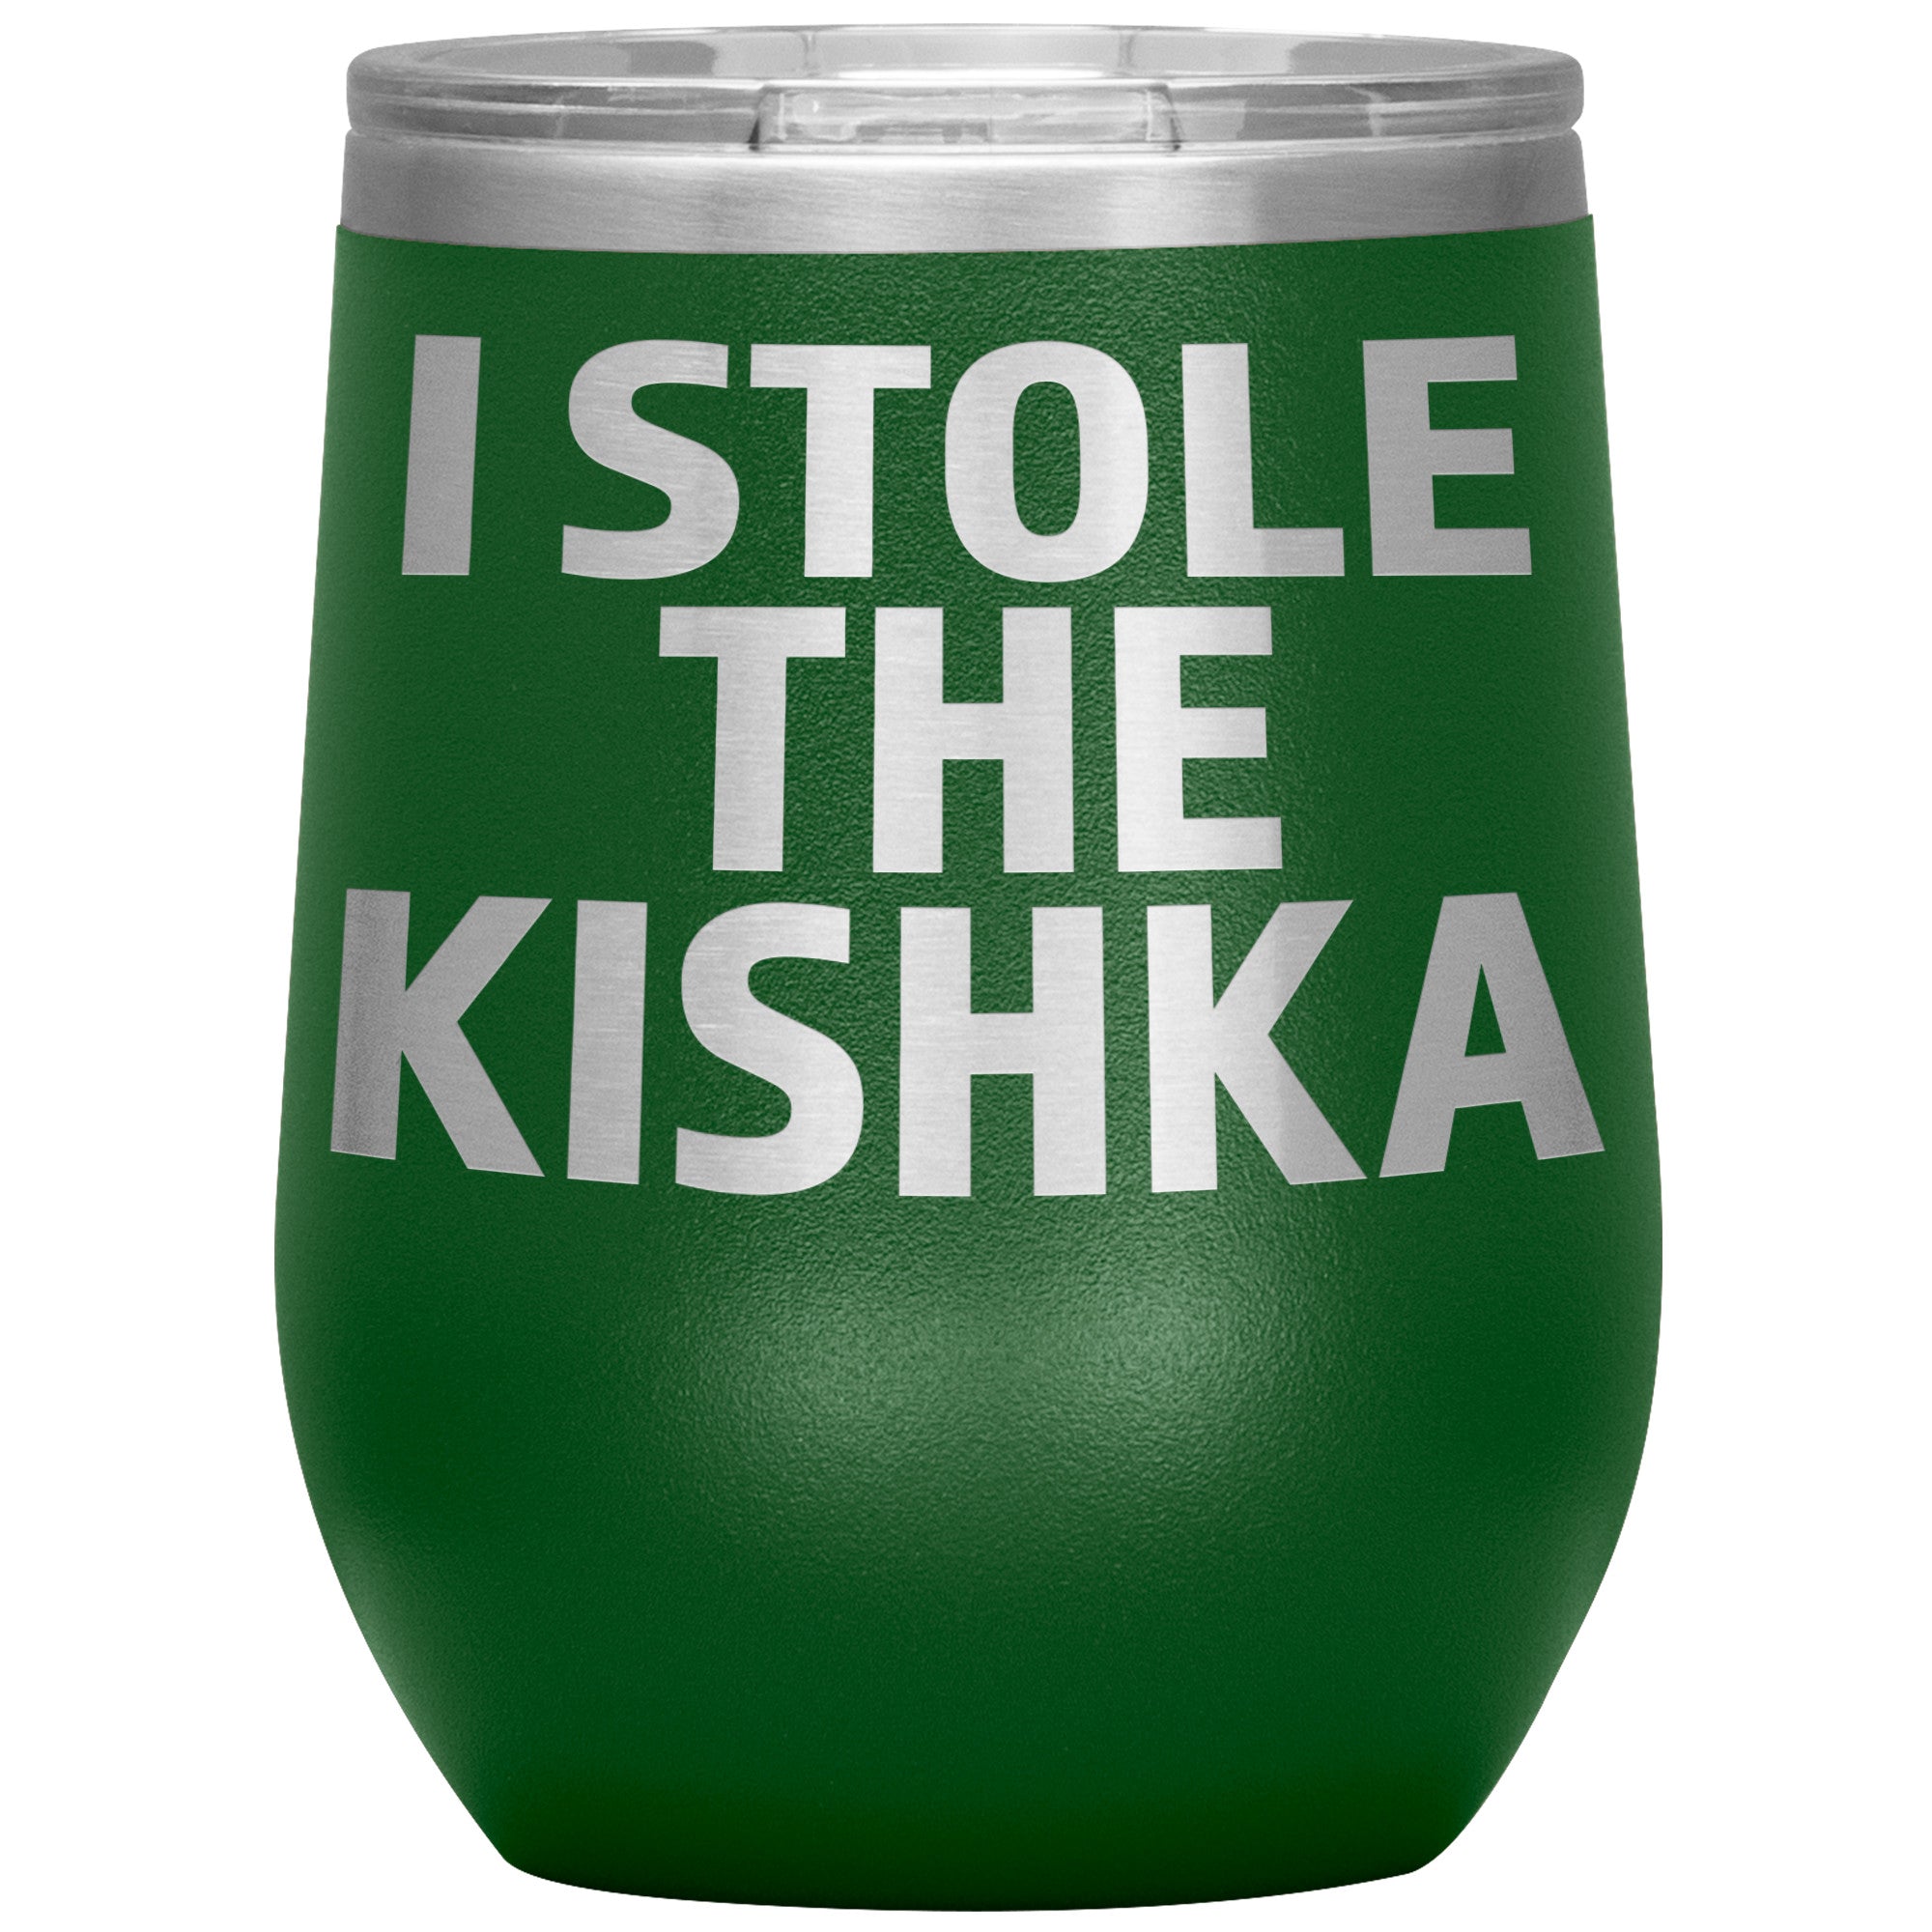 I Stole The Kishka Insulated Wine Tumbler Tumblers teelaunch Green  